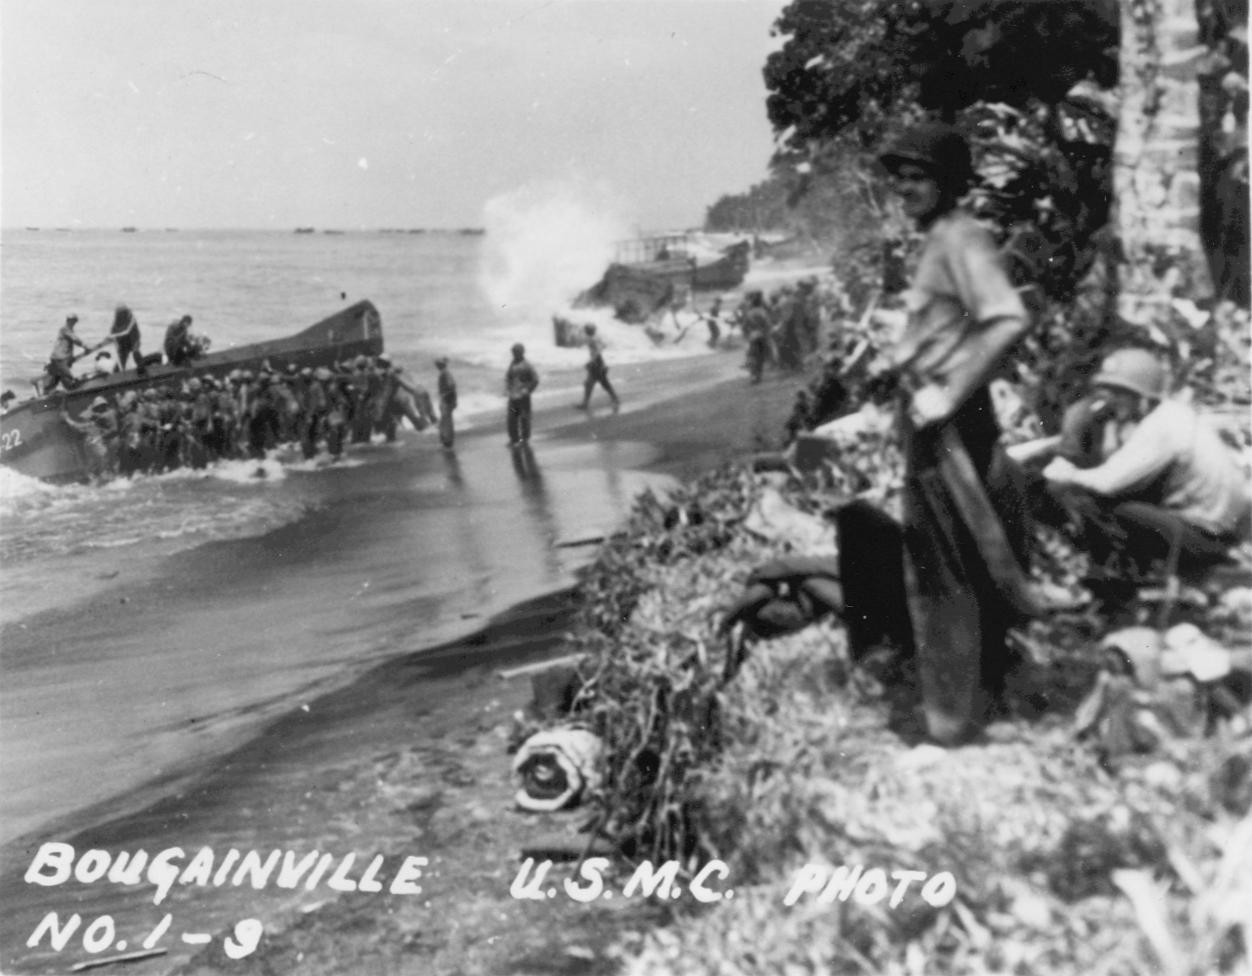 [photo] Us Marines On A Beach On Bougainville Solomon Islands 1943 1944 World War Ii Database